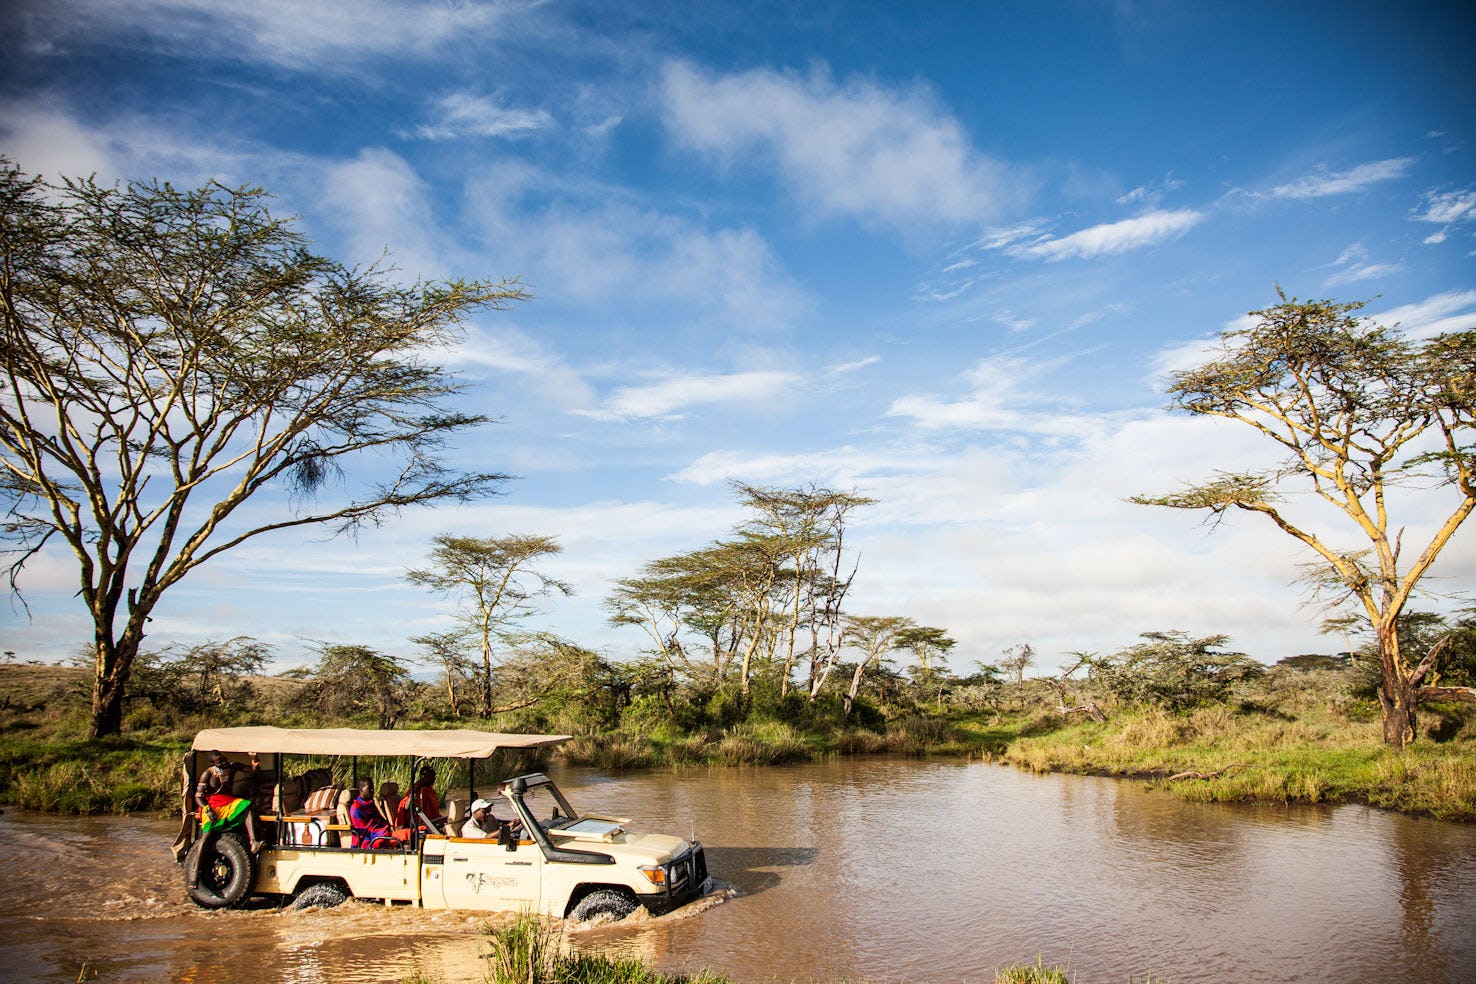 Plan an affordable Kenya Safari